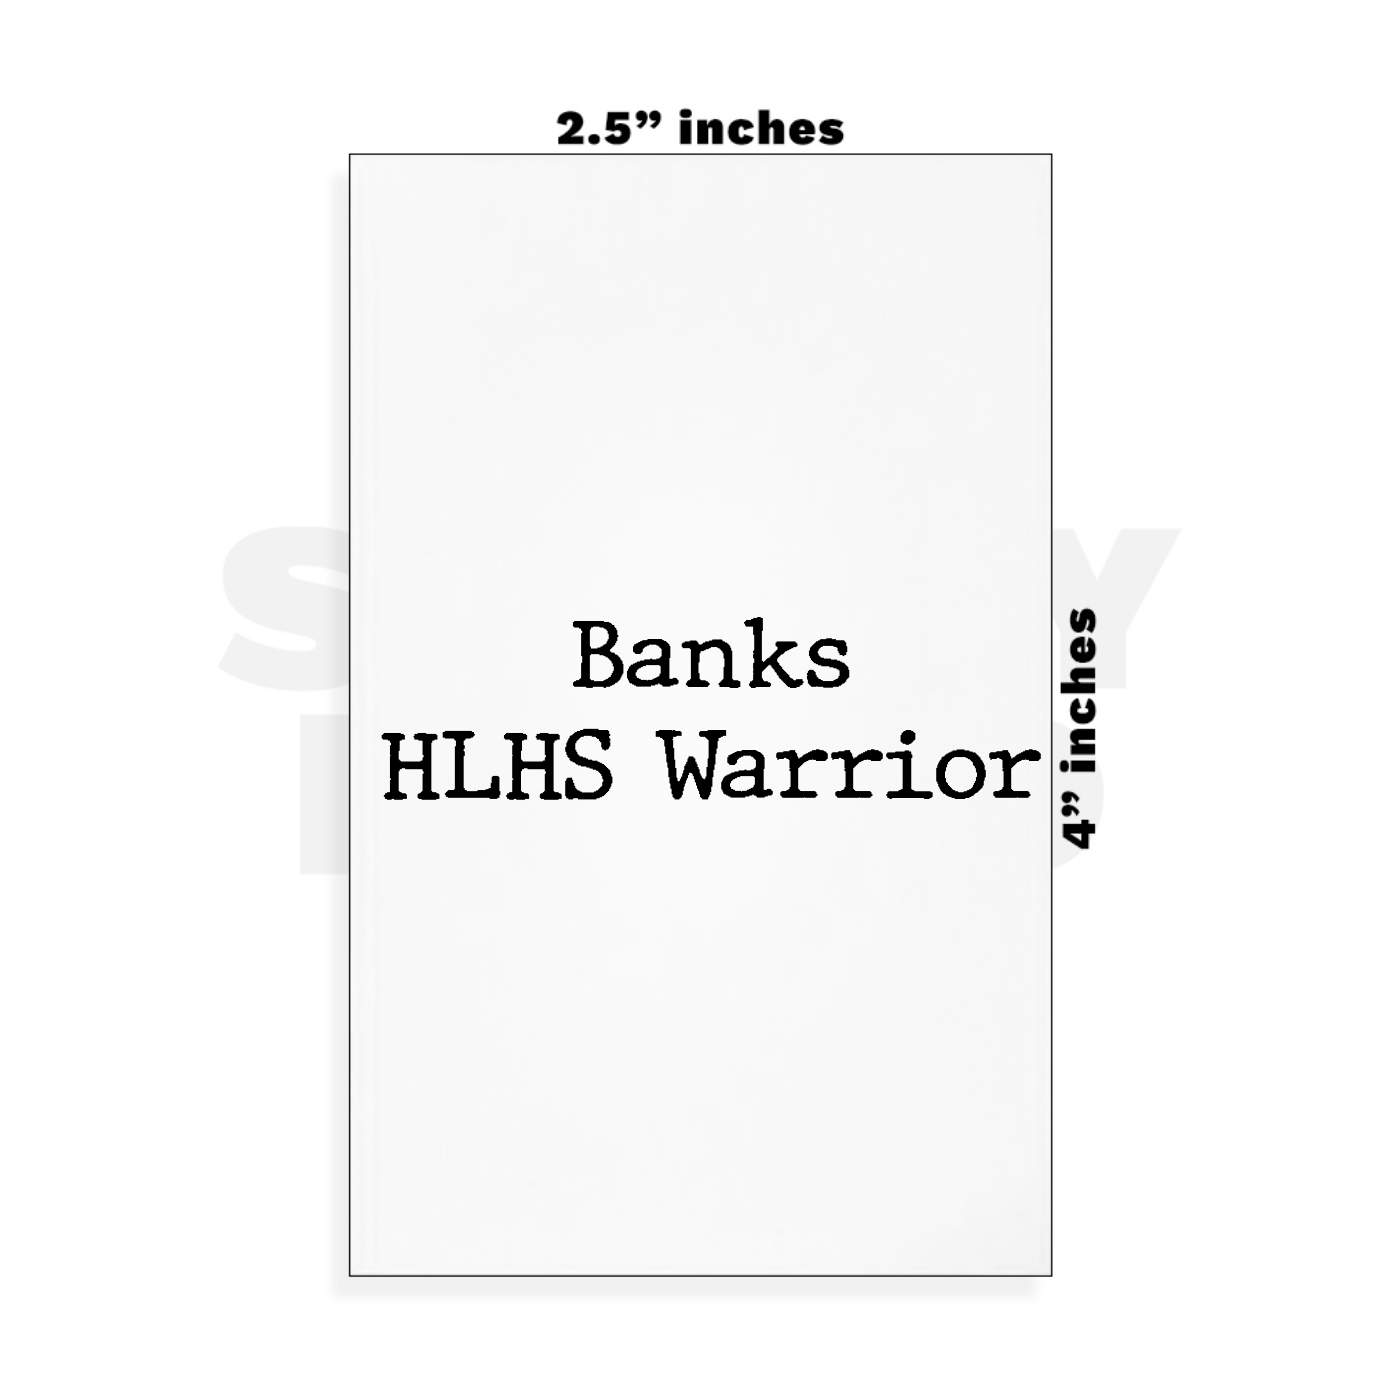 banks HLHS Warrior